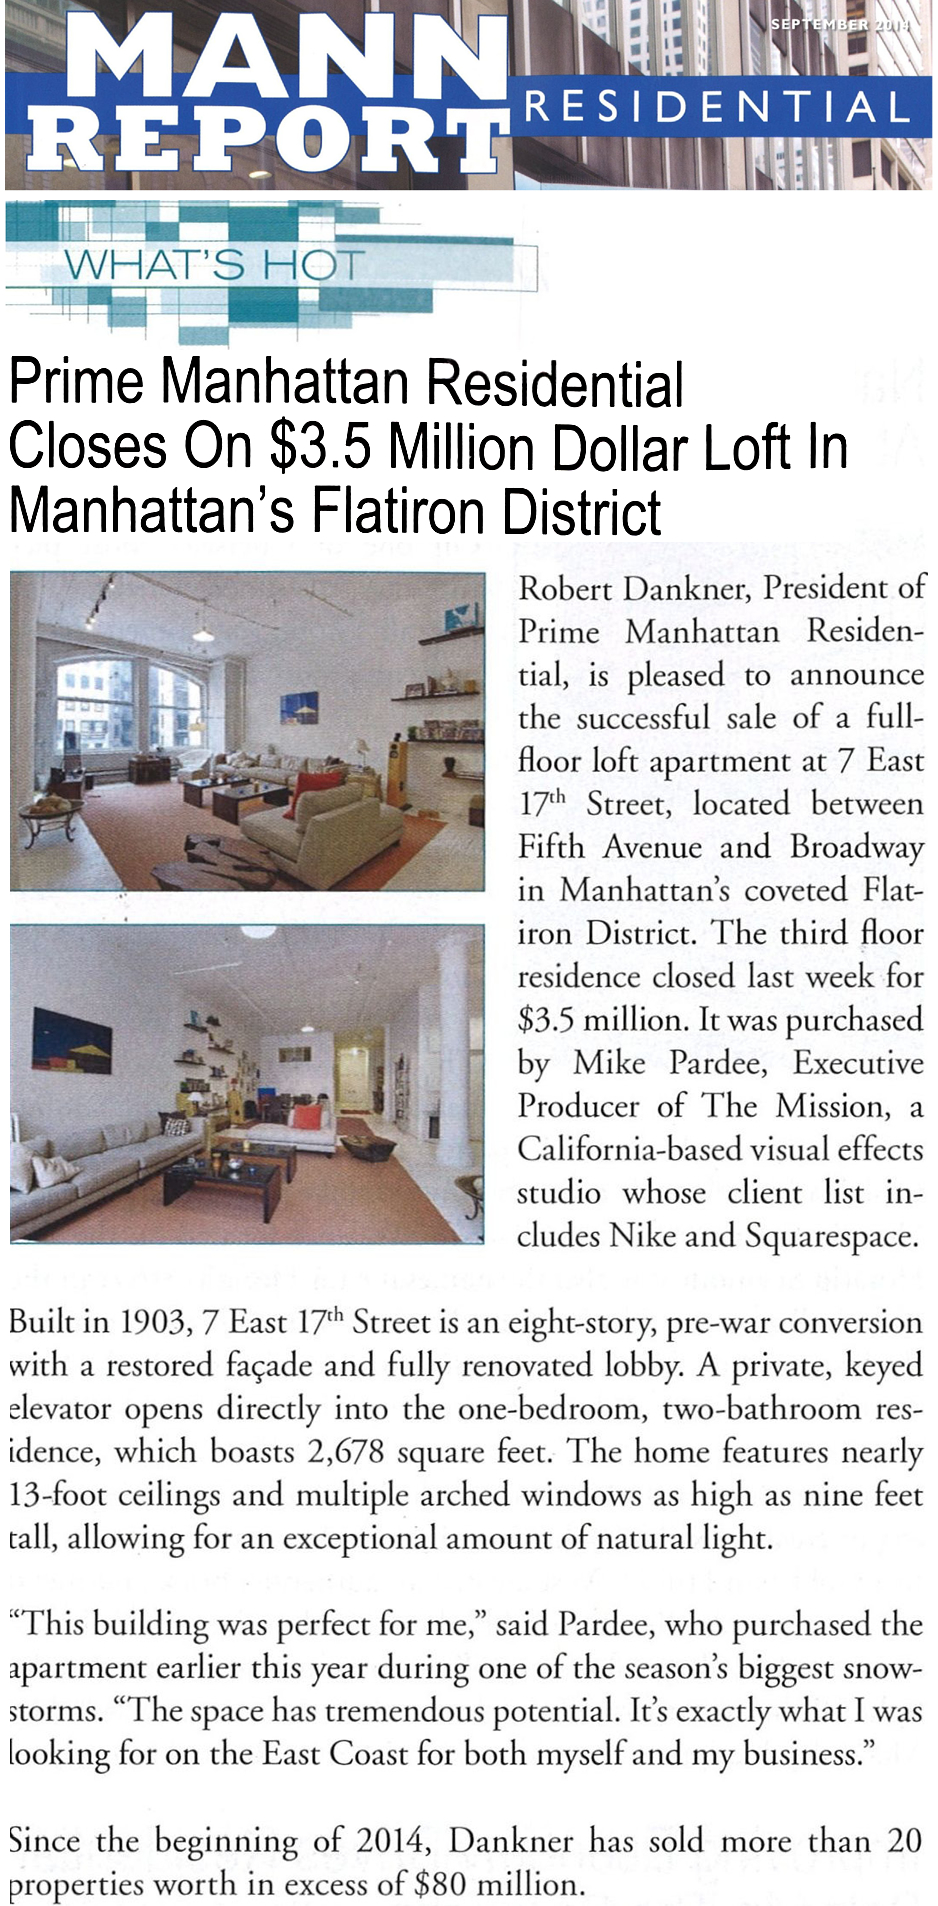 Prime Manhattan Residential Closes on 3.5 Million Dollar Loft in the Flatiron District part 1